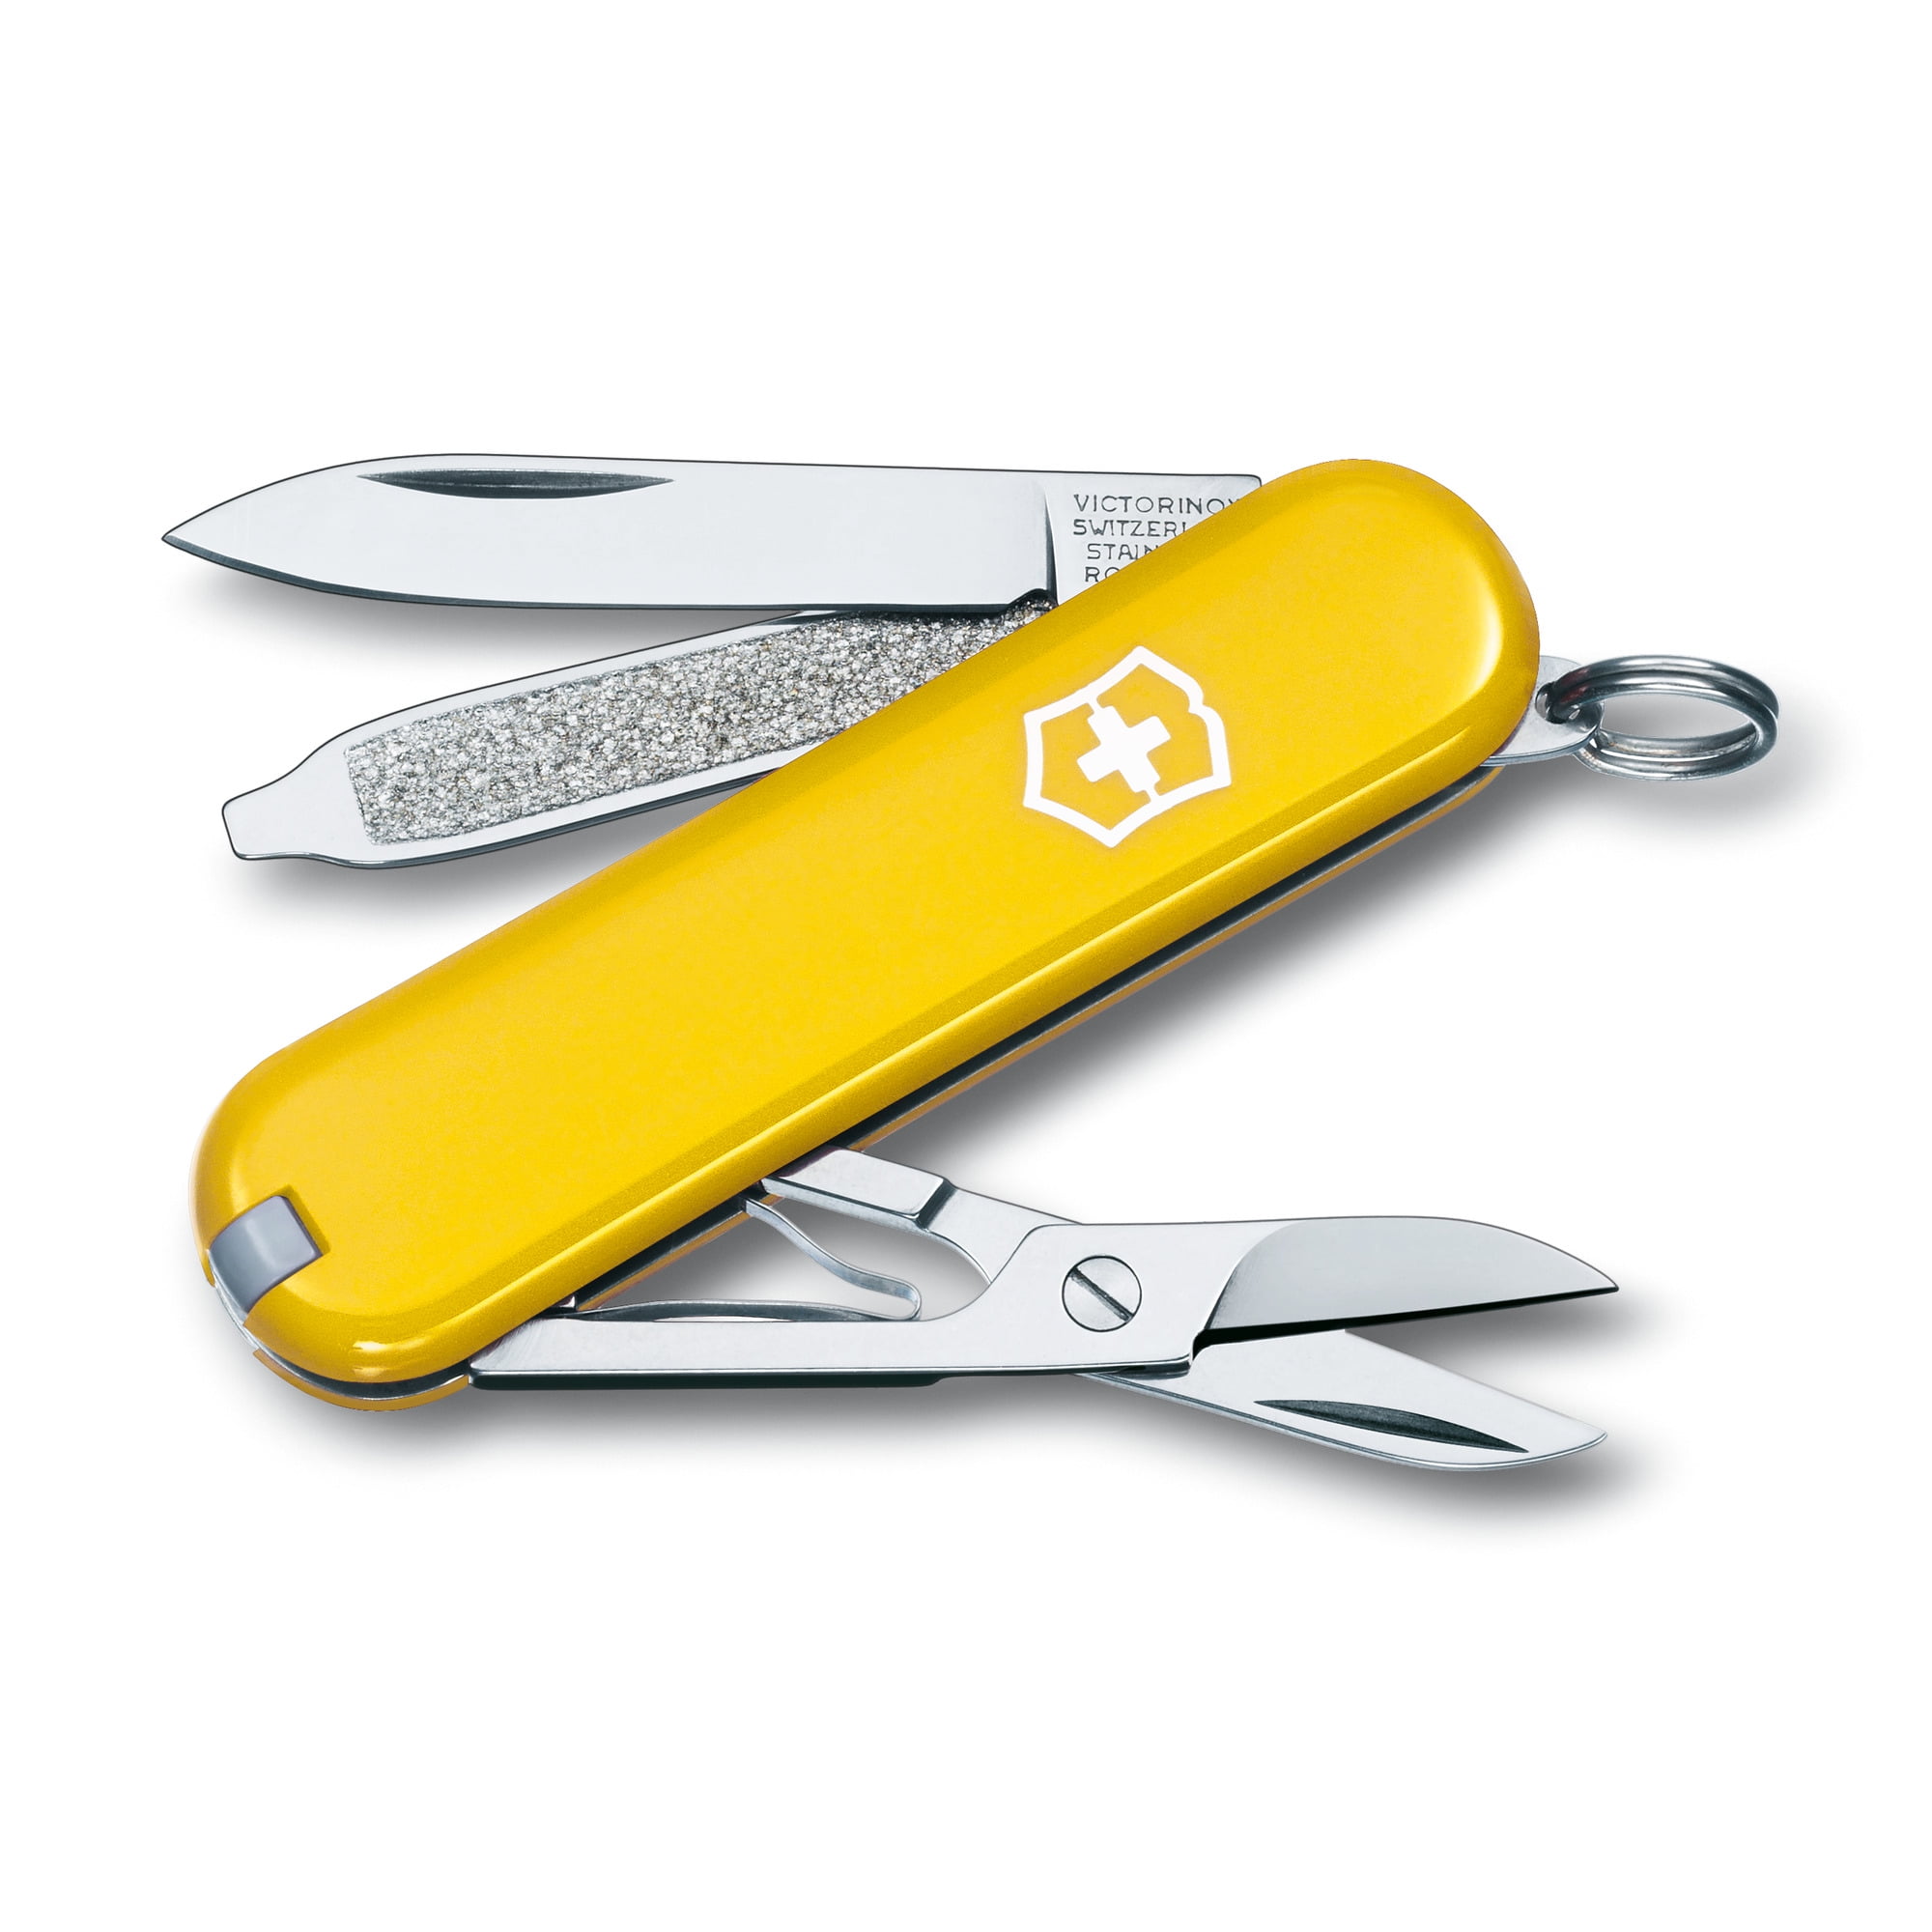 Victorinox Caliente Classic SD Designer Swiss Army Knife